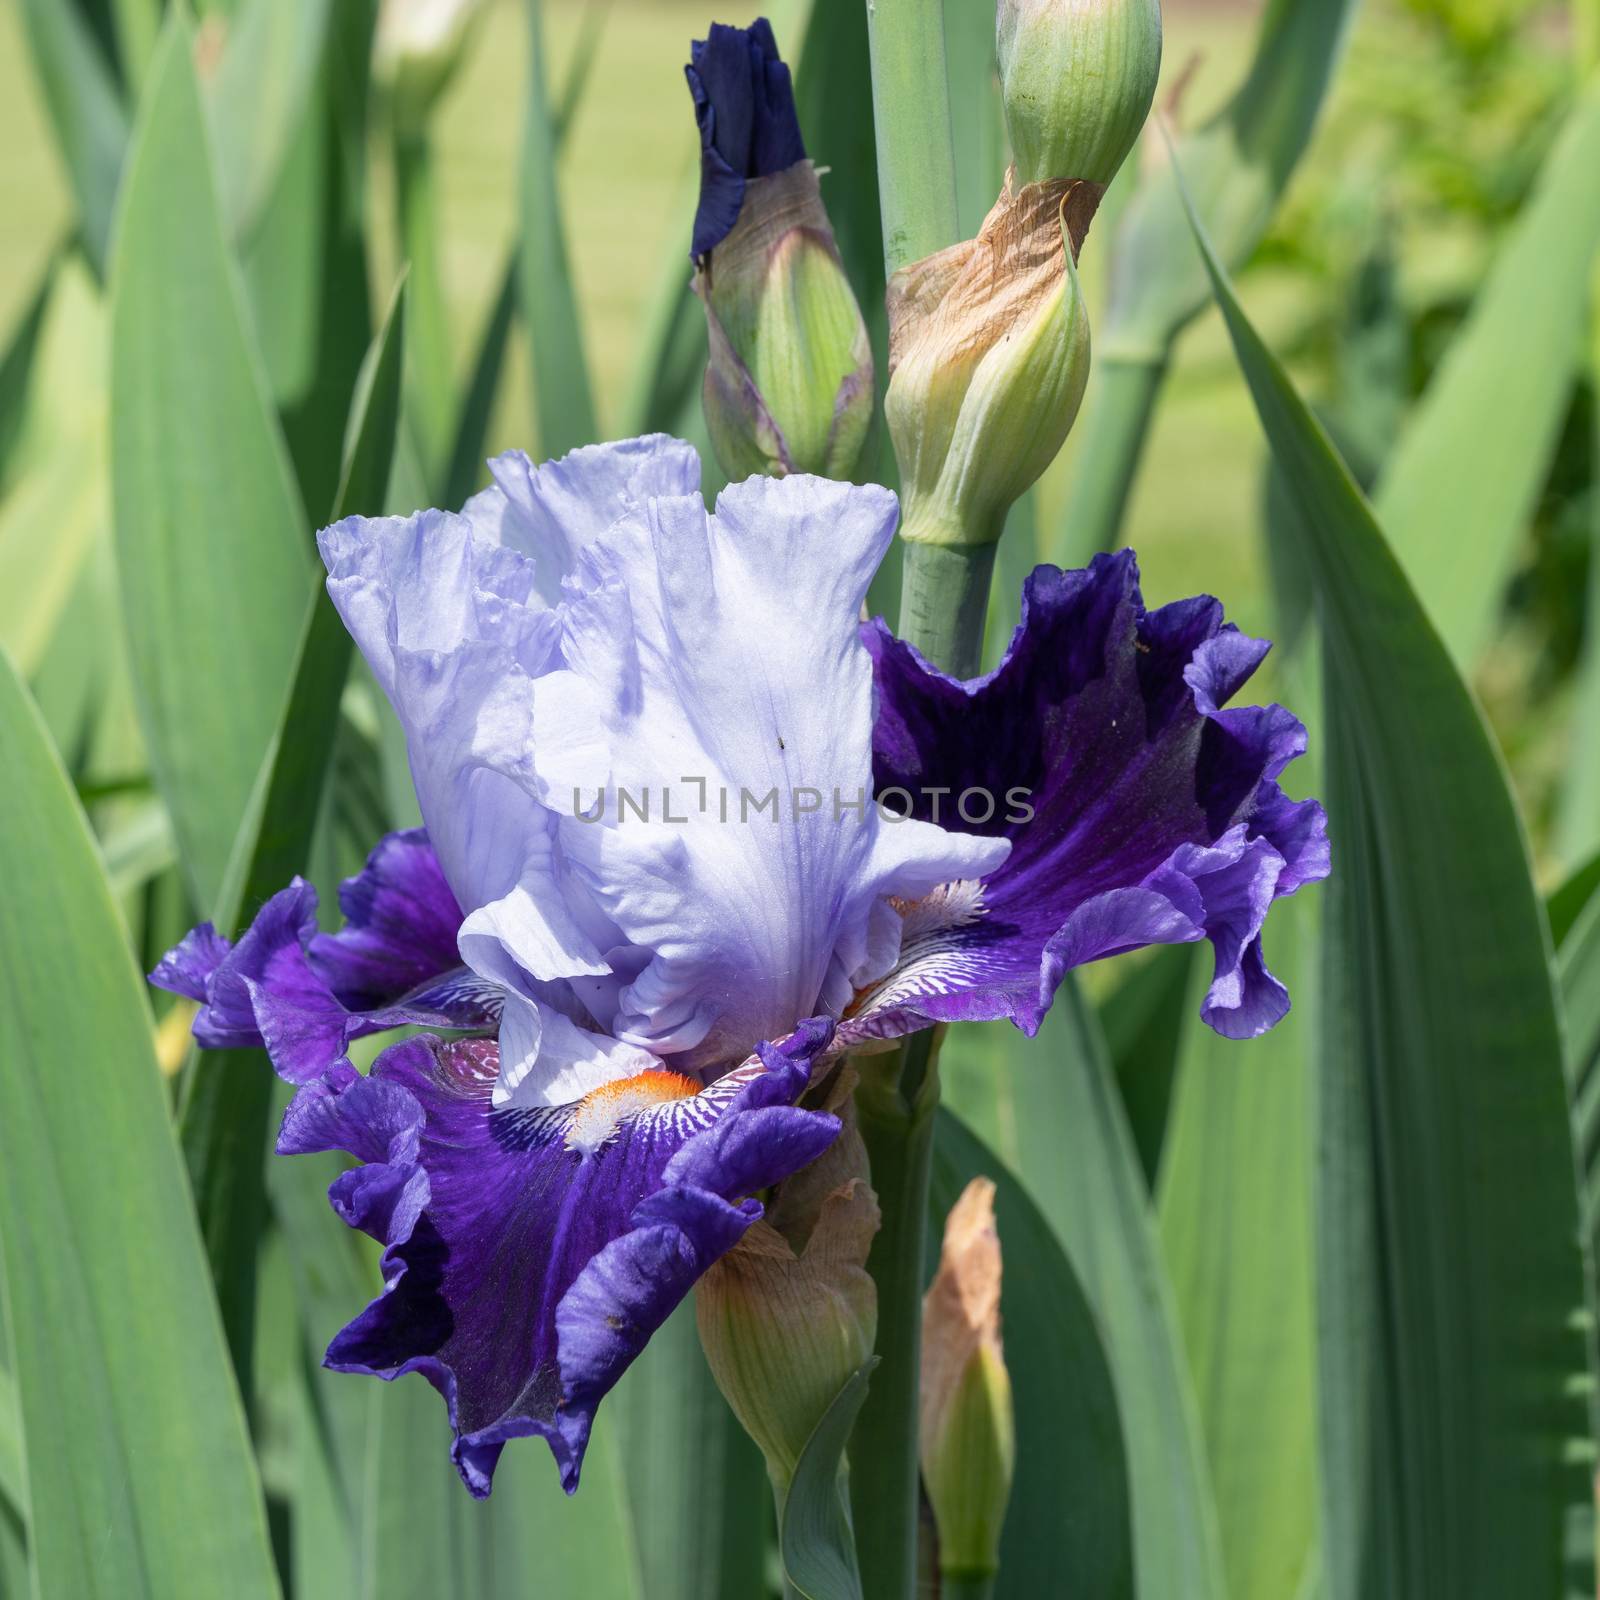 German iris (Iris barbata), close up of the flower head